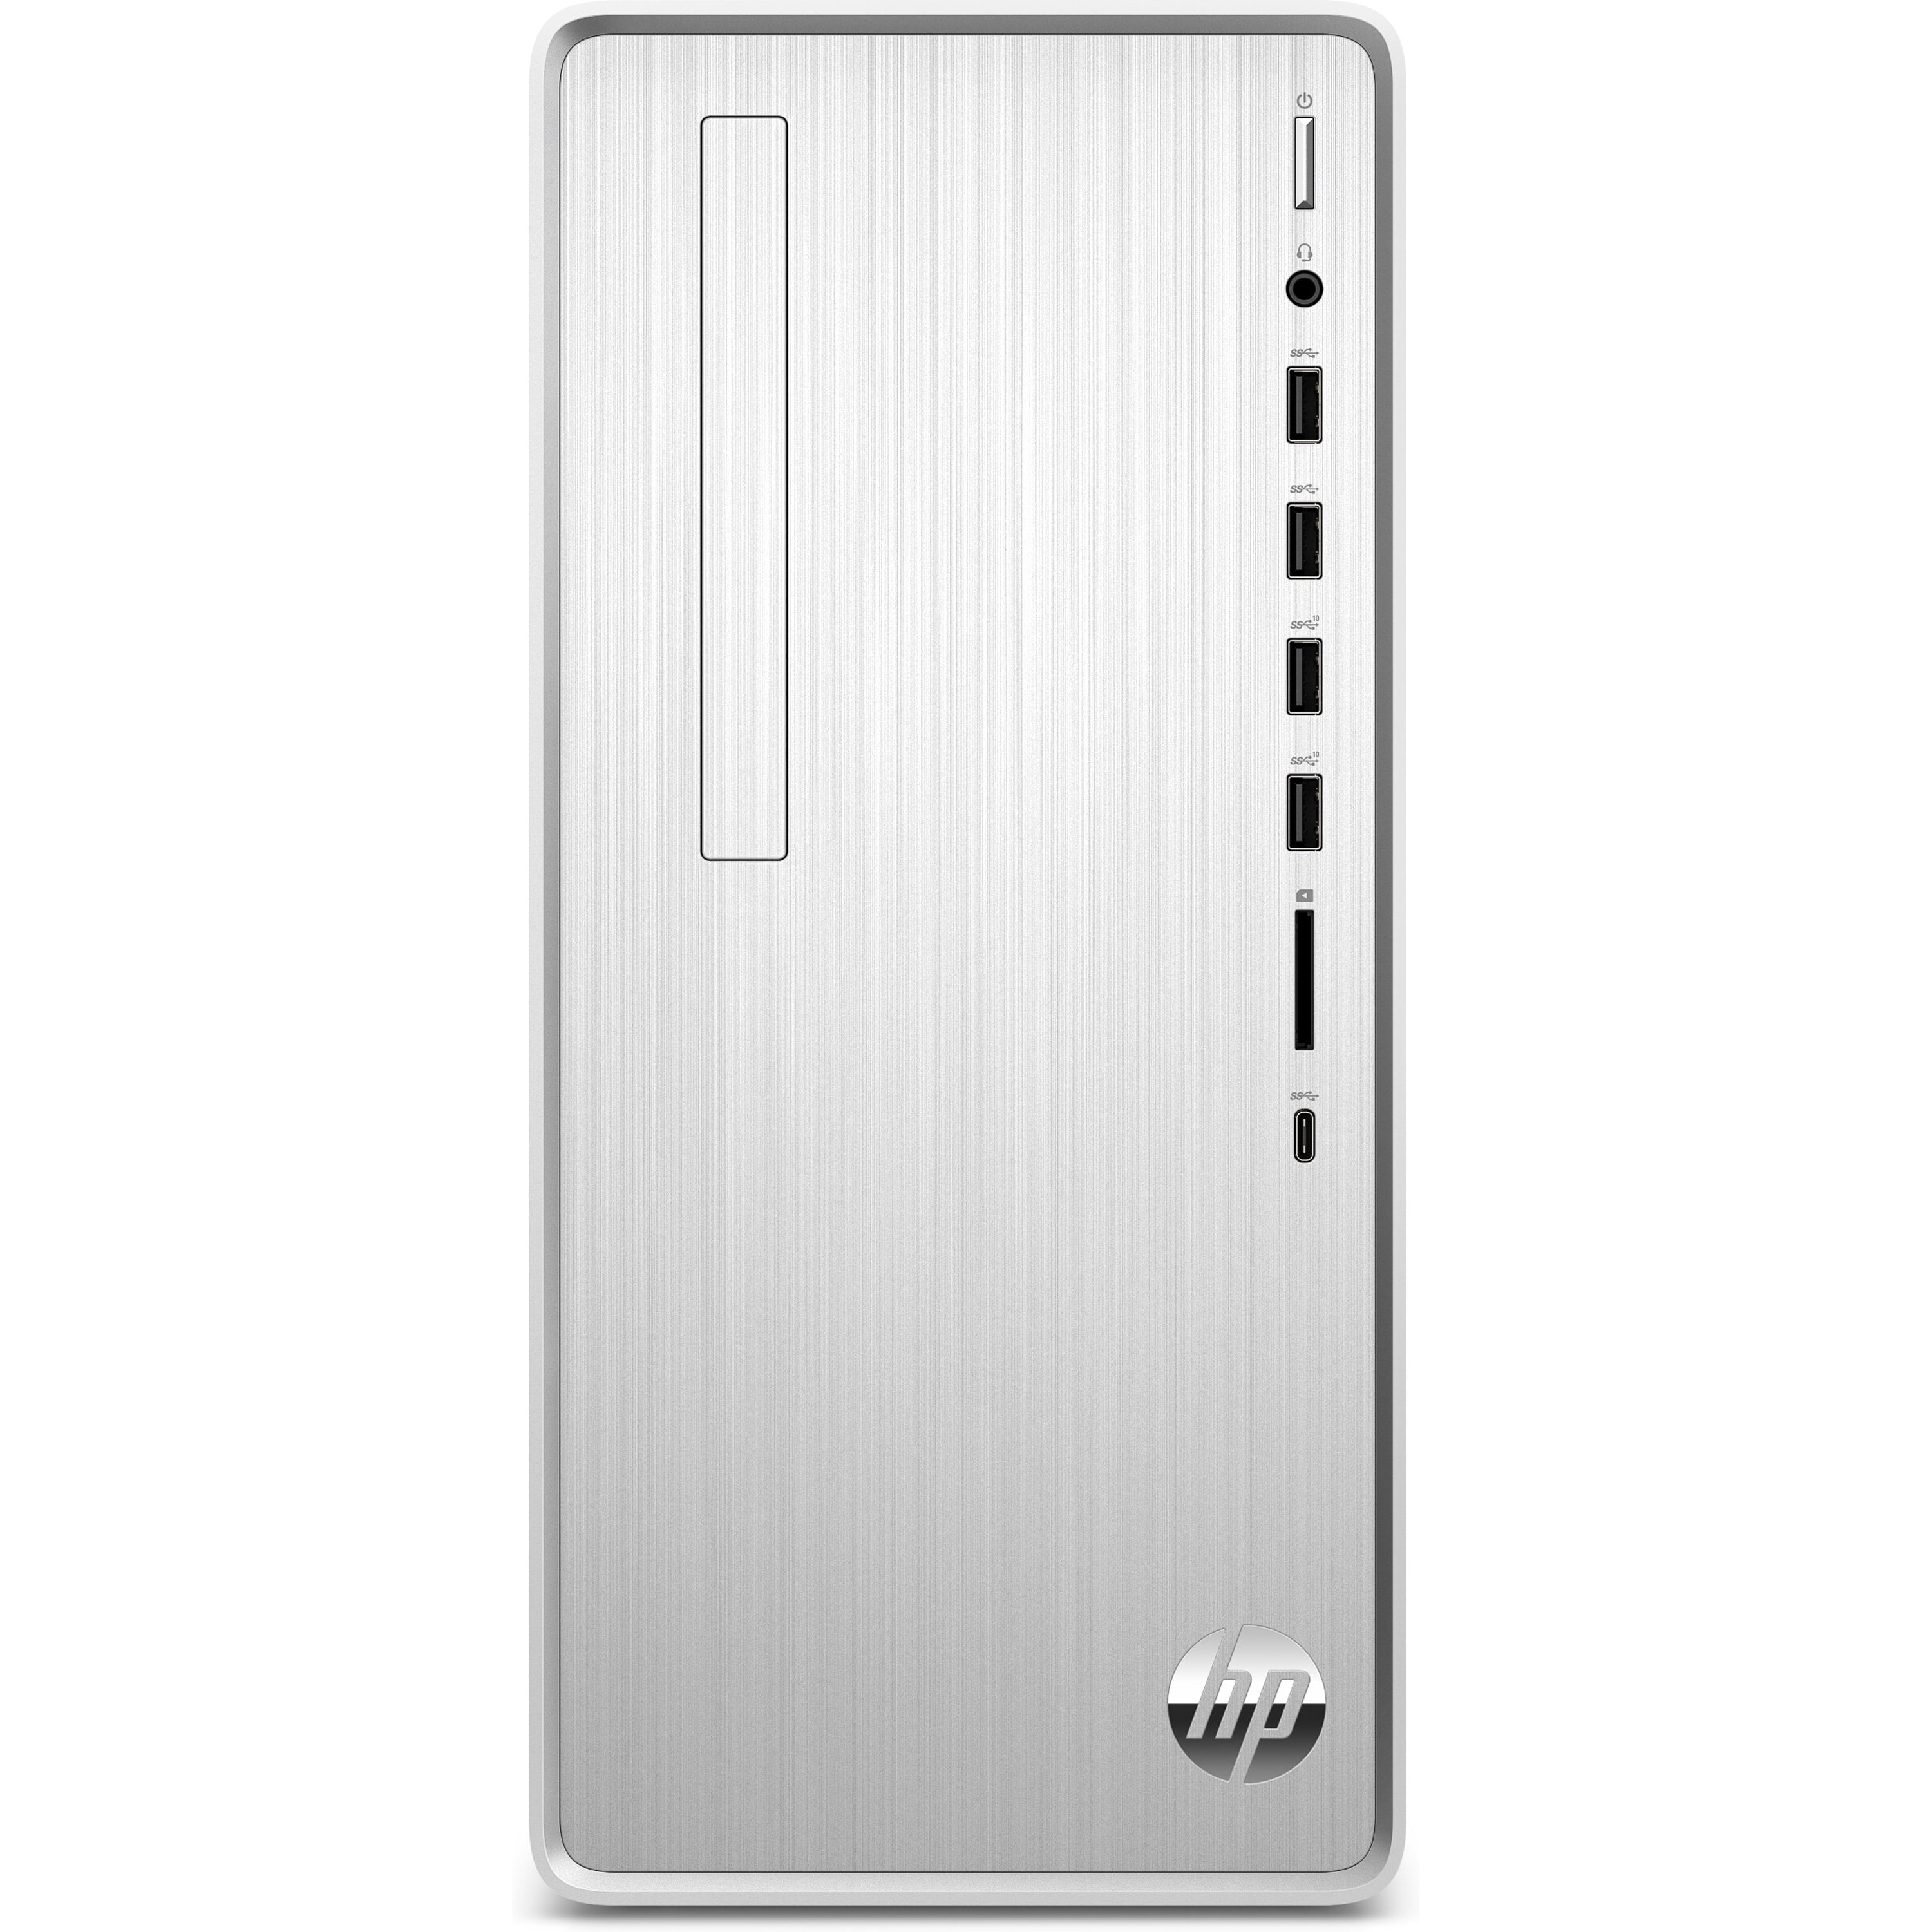 1TB NVMe SSD HP Pavilion TP01 Tower Desktop Computer DVD-Writer AMD Radeon Graphics 32GB DDR4 RAM Windows 11 Pro AMD Ryzen 7 5700G 8-Core up to 4.60 GHz Processor 